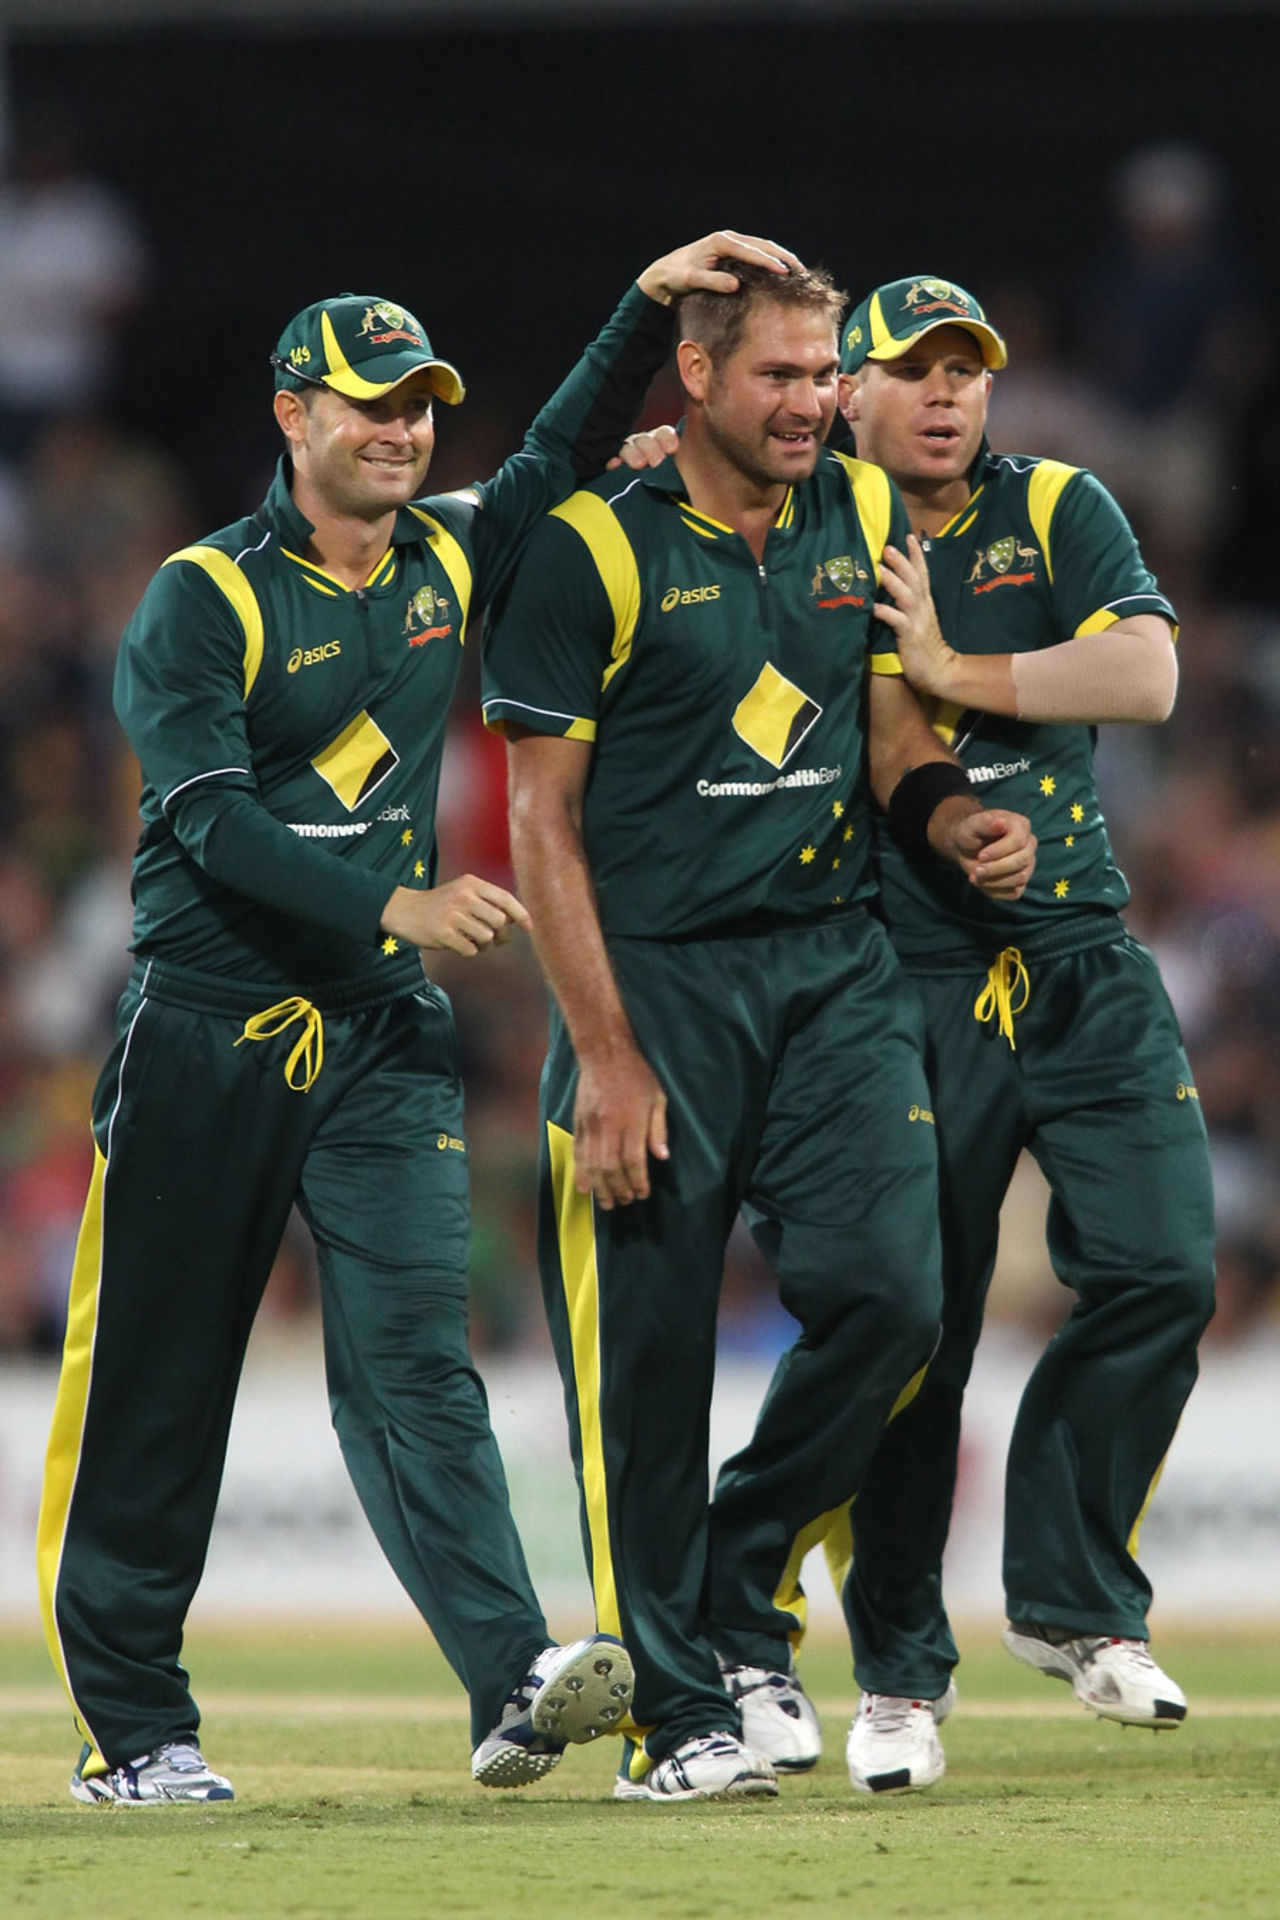 Australia celebrate Rohit Sharma's dismissal, Australia v India, Commonwealth Bank Series, Adelaide, February 12, 2012
